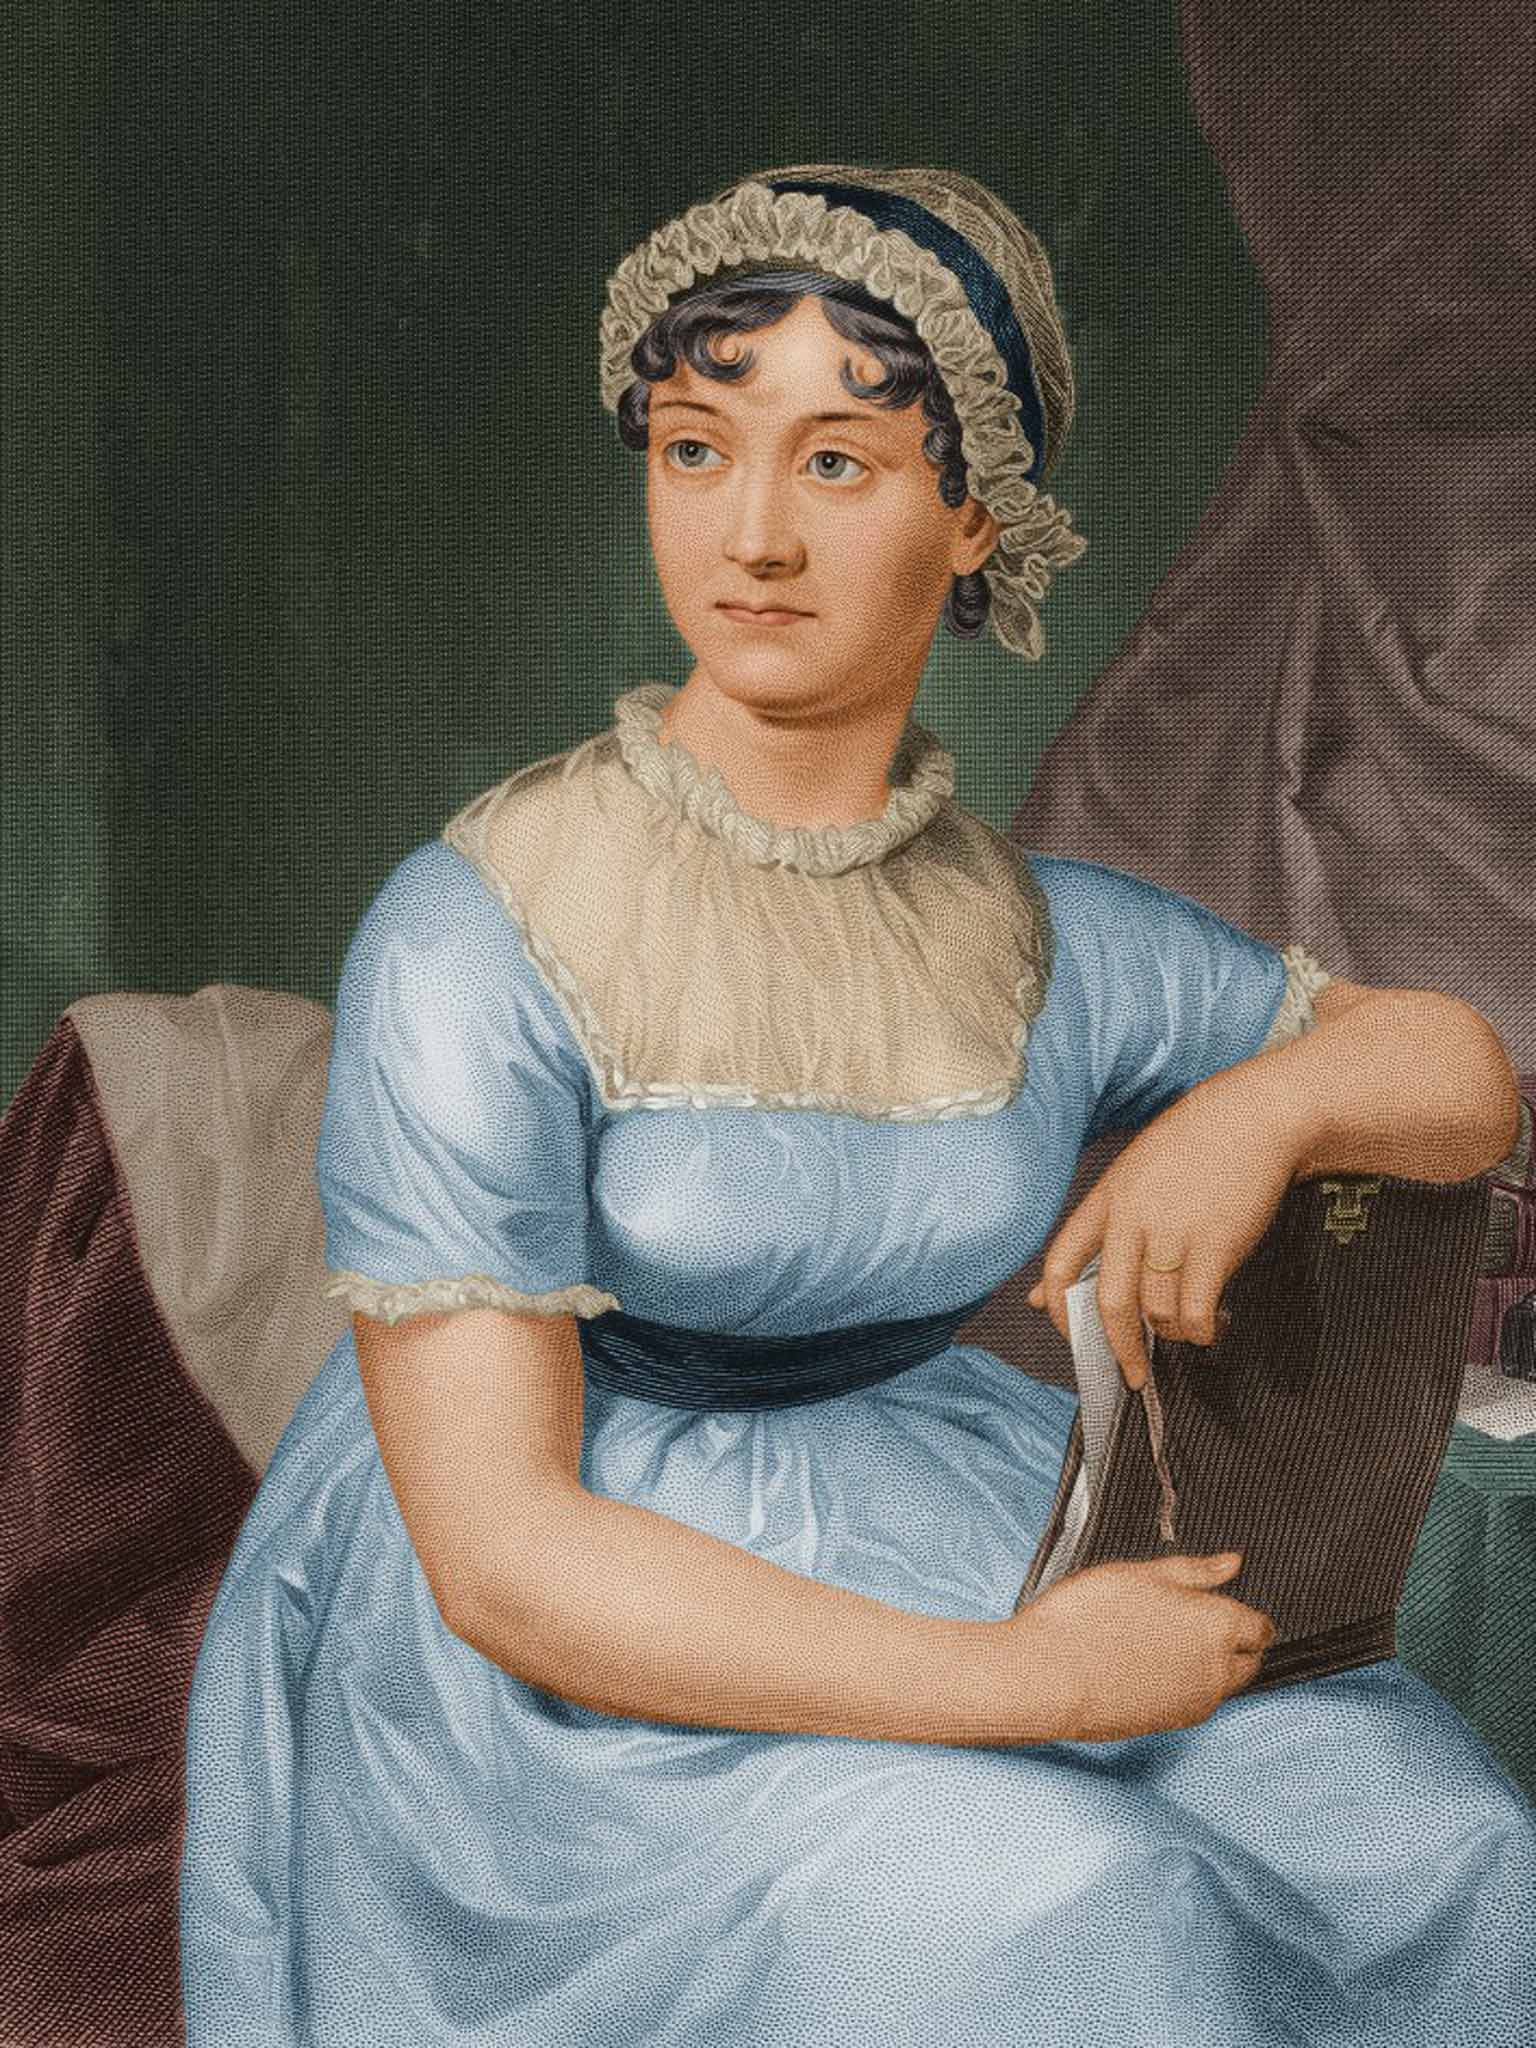 Teen fiction: Jane Austen's Emma